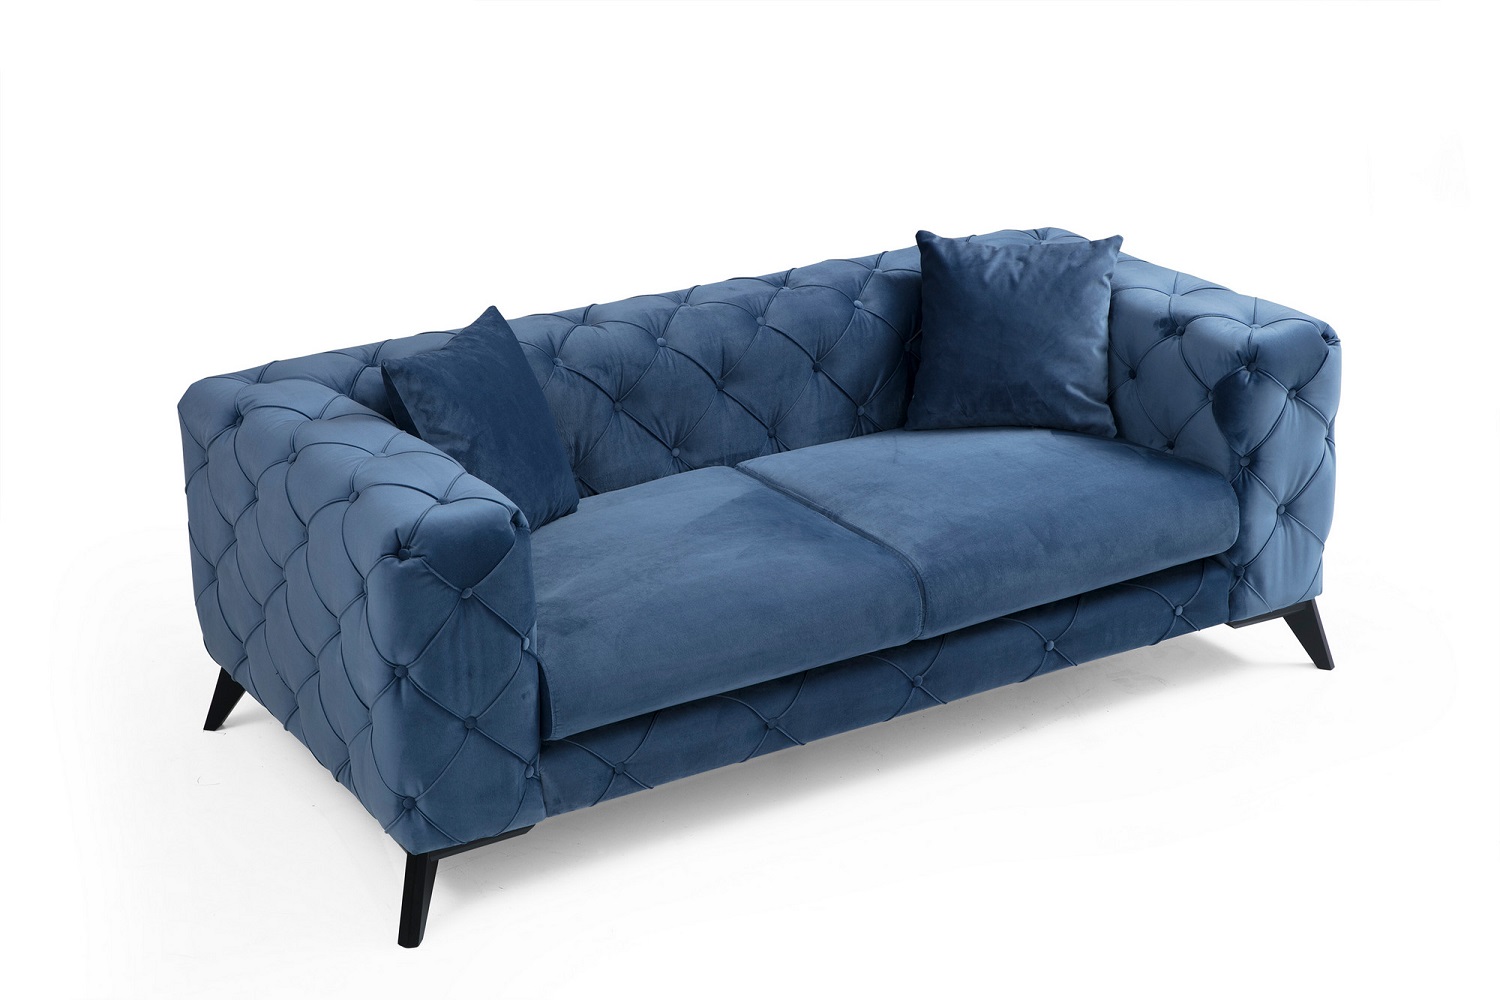 dizajnova-sedacka-rococo-197-cm-modra-2